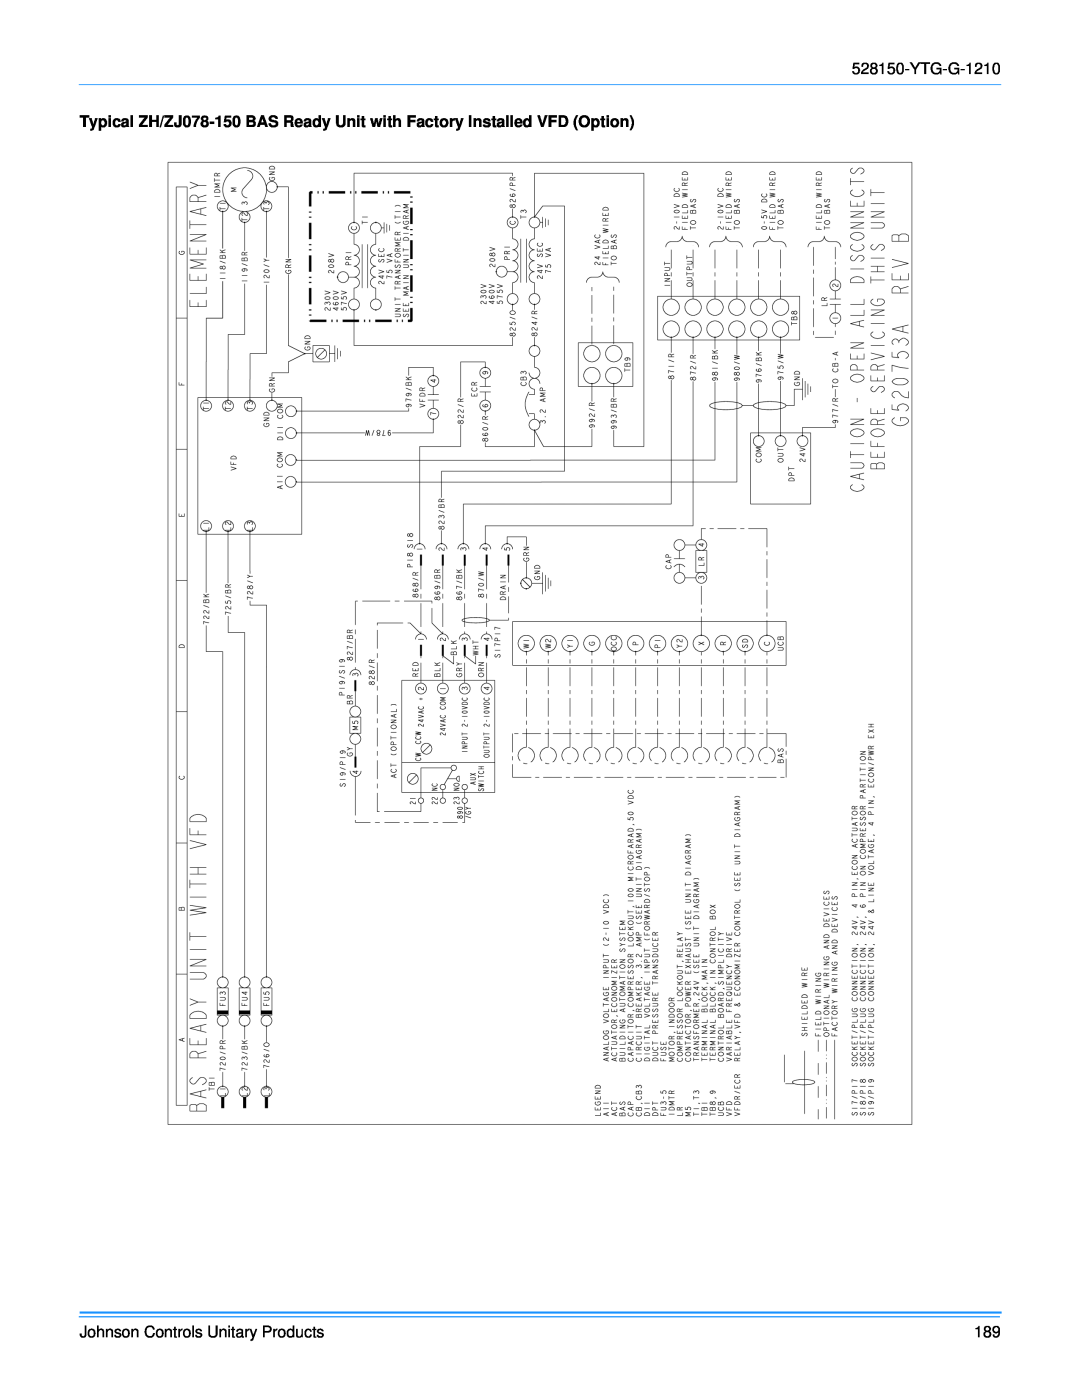 York R-410A ZH/ZJ/ZR Series manual YTG-G-1210, Johnson Controls Unitary Products 